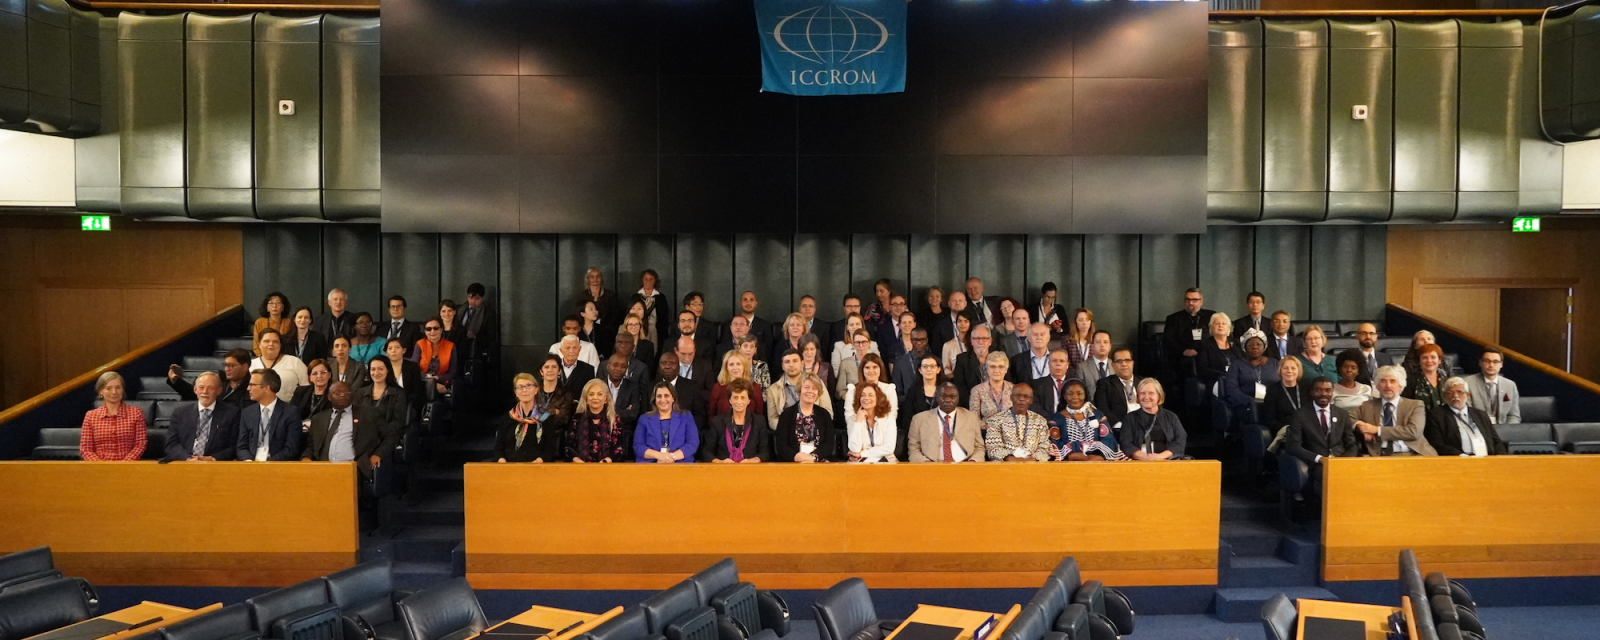 ¡Próximamente!: La 33ª reunión de la Asamblea General del ICCROM (AG33)